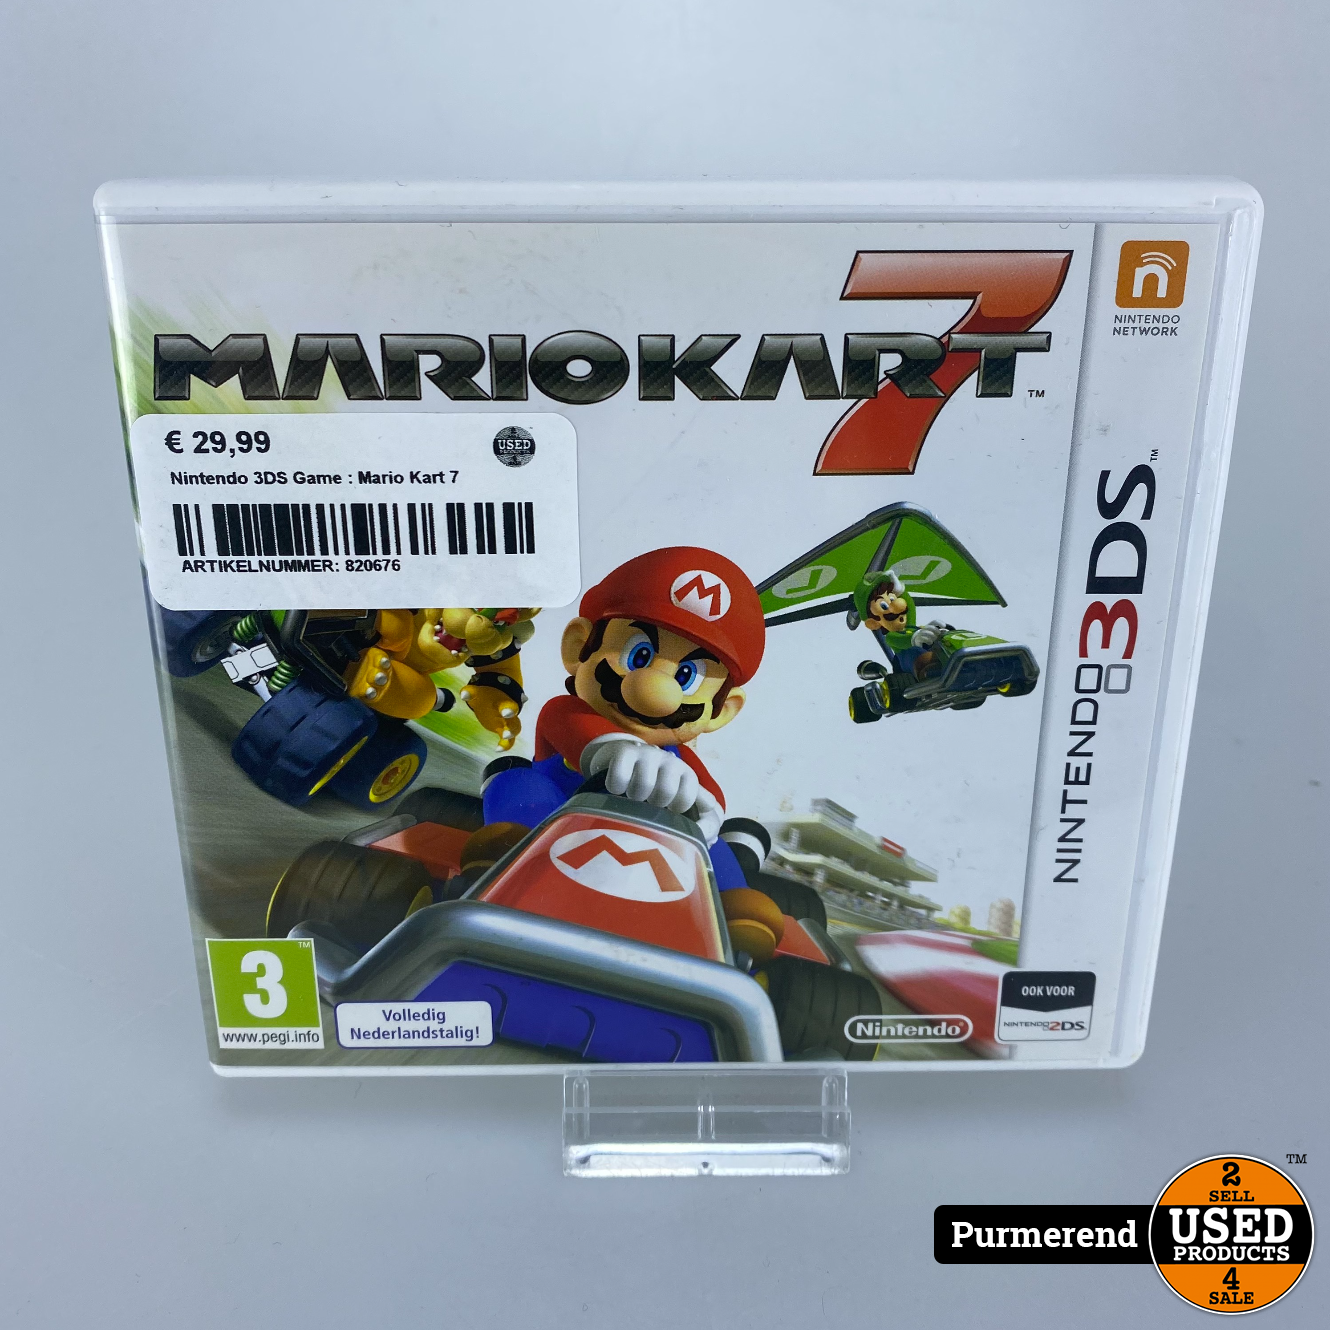 verschil Schuur verlamming Nintendo 3DS Game : Mario Kart 7 - Used Products Purmerend